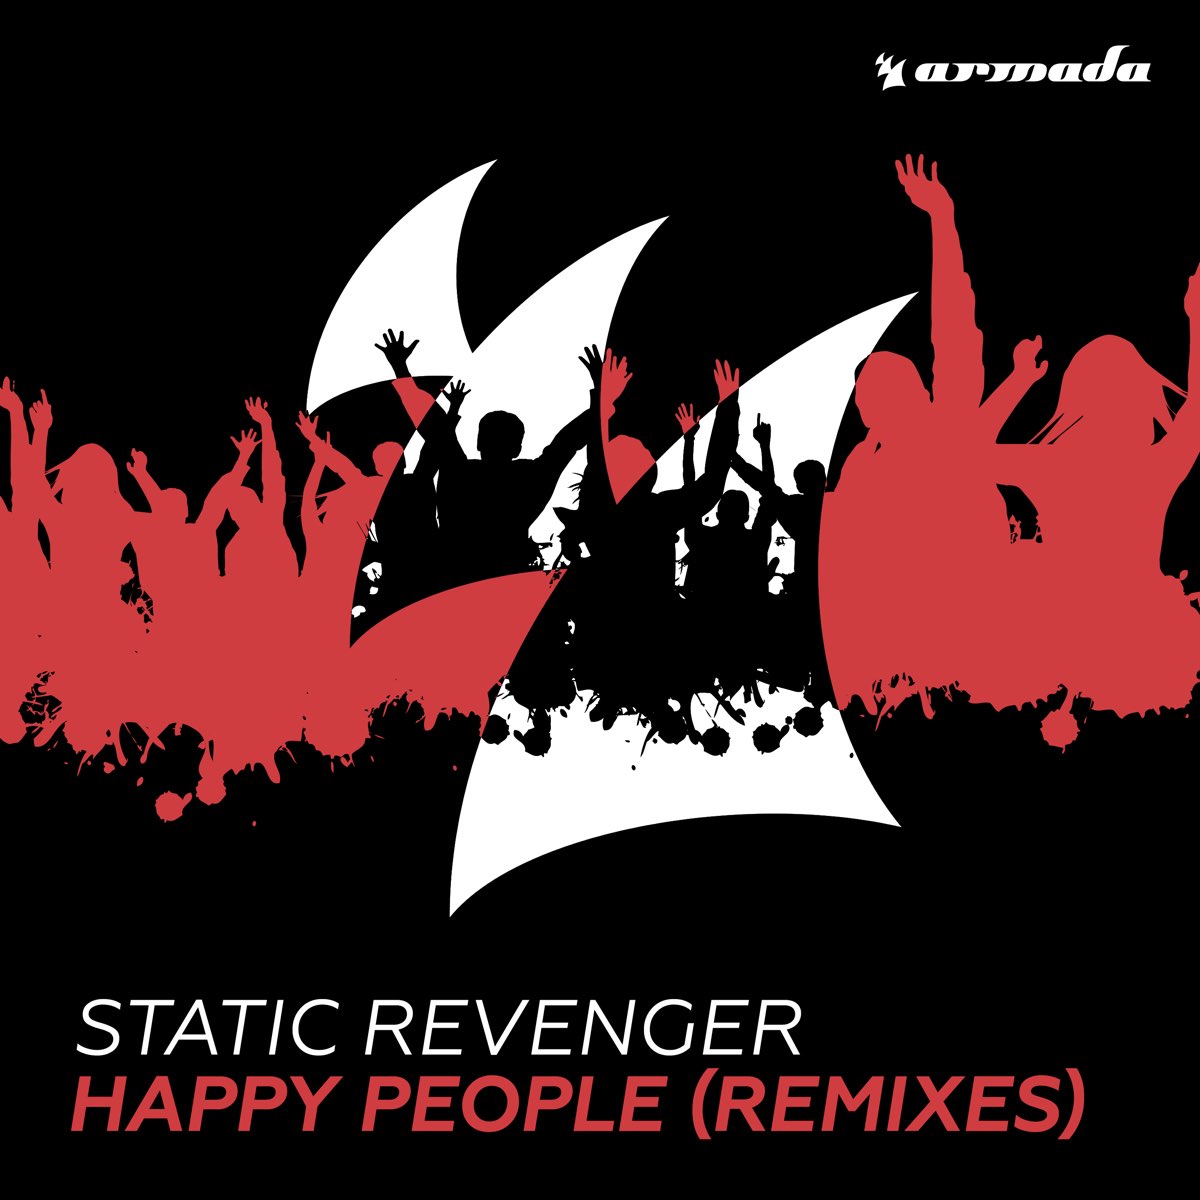 Static Revenger Happy people. Хэппи пипл. Be happy remix